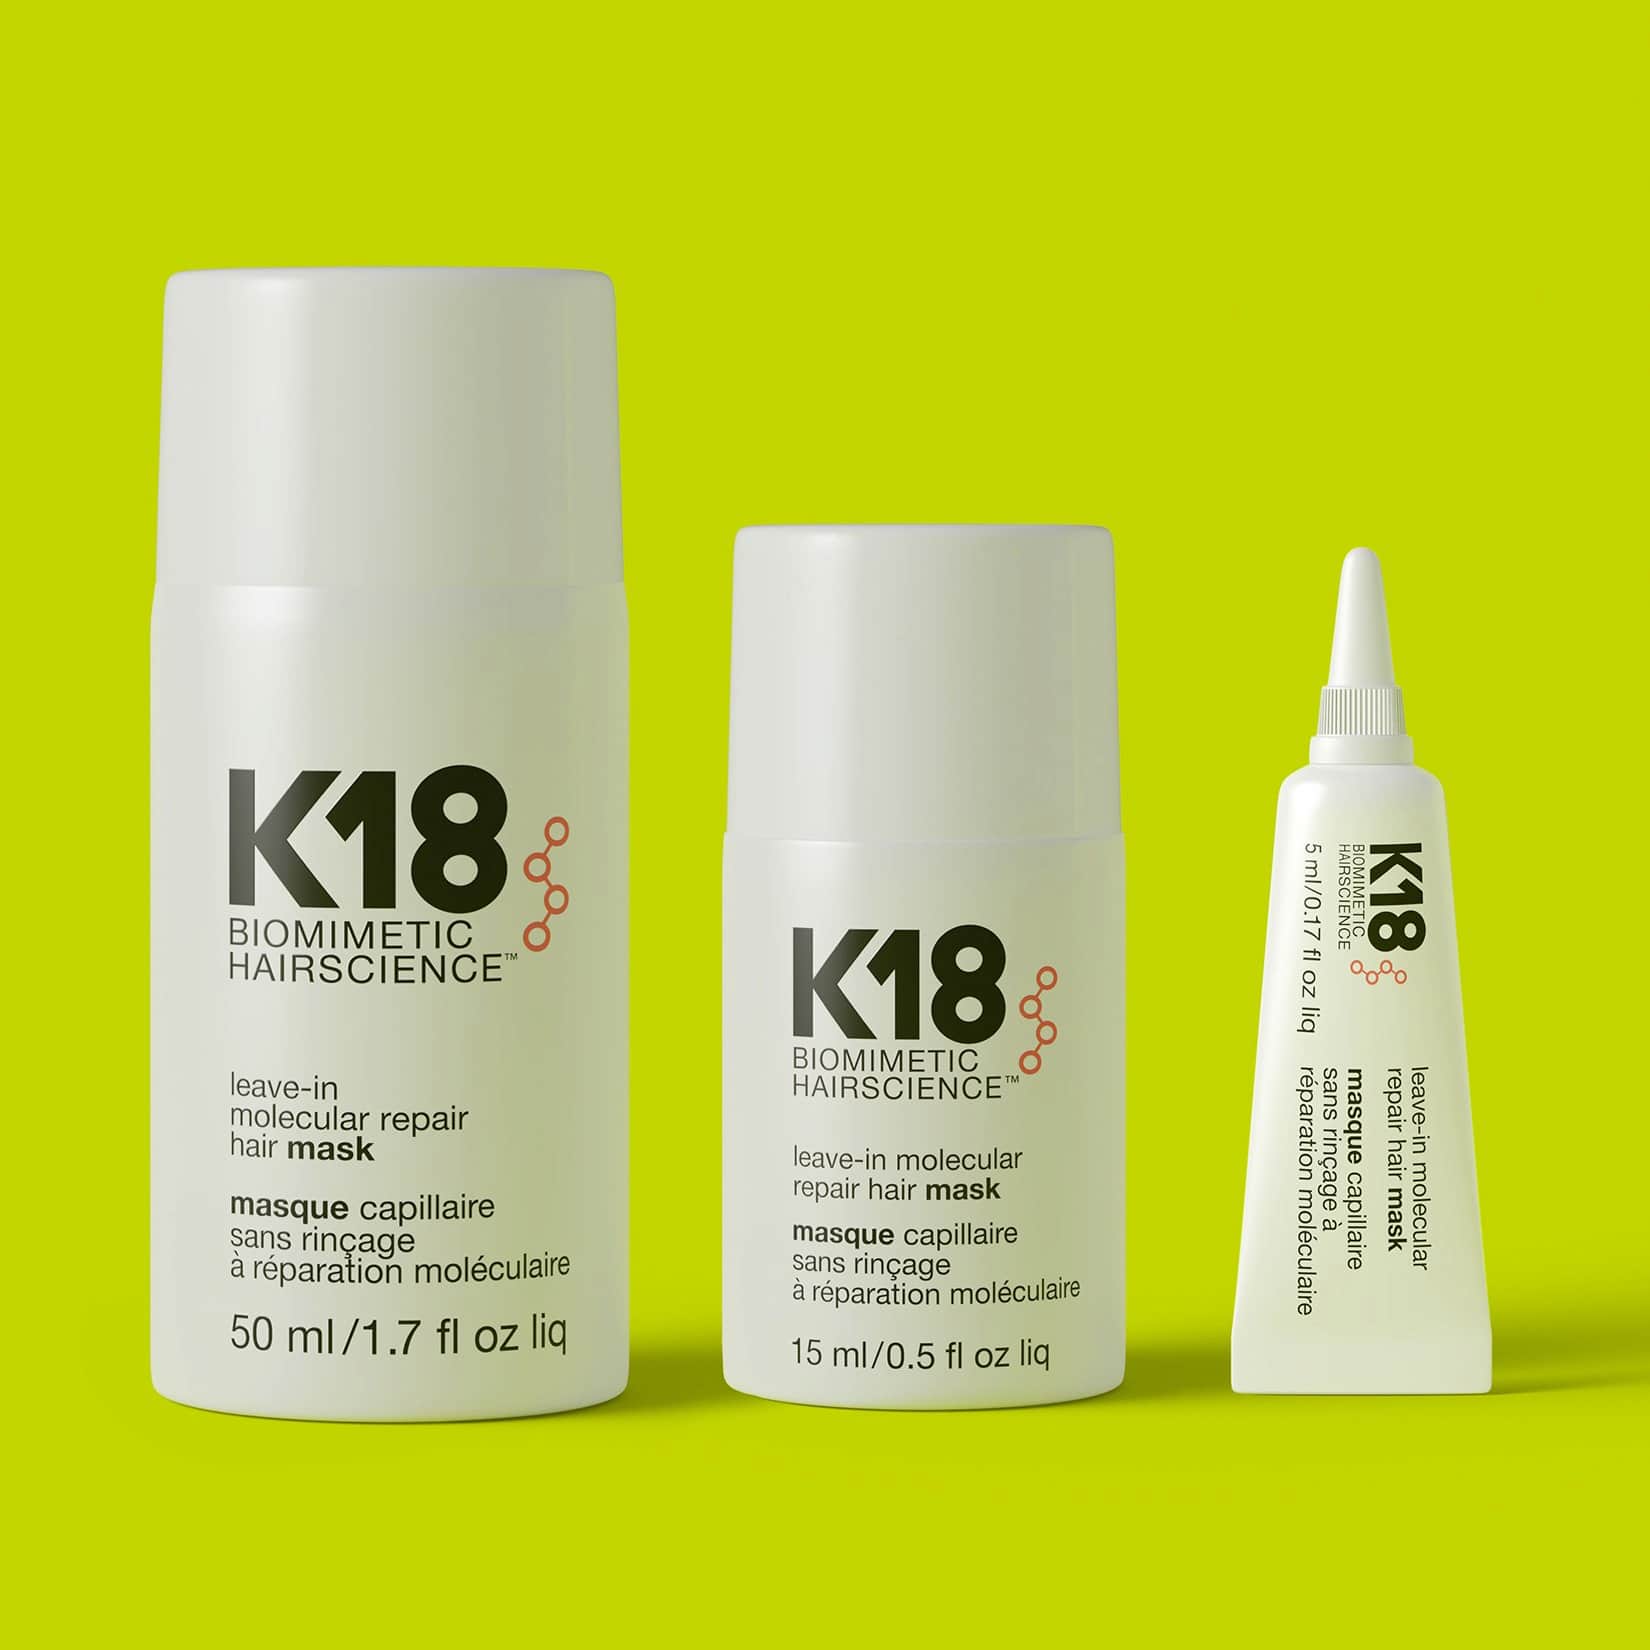 K18 Leave-in molecular repair hair mask 50ml | £4 OFF Your 1st Order